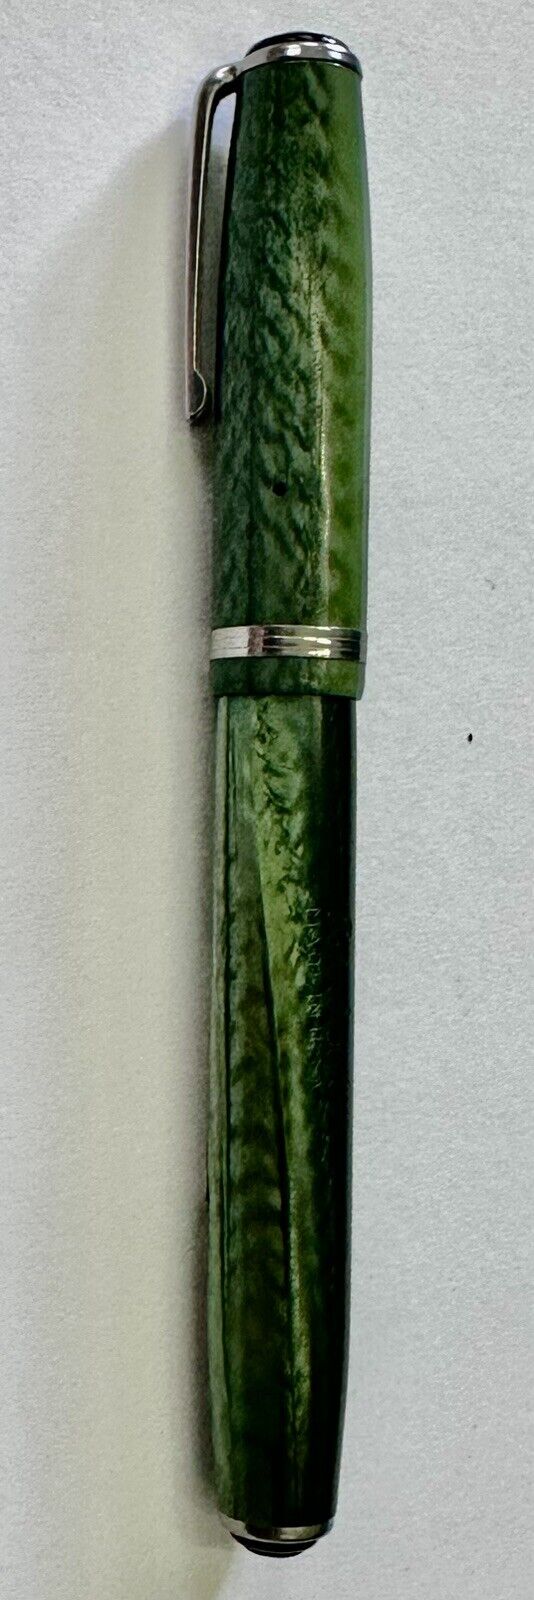 Vintage 1950s Green Esterbrook Fountain Pen 1551 FINE Nib and Sac Excellent